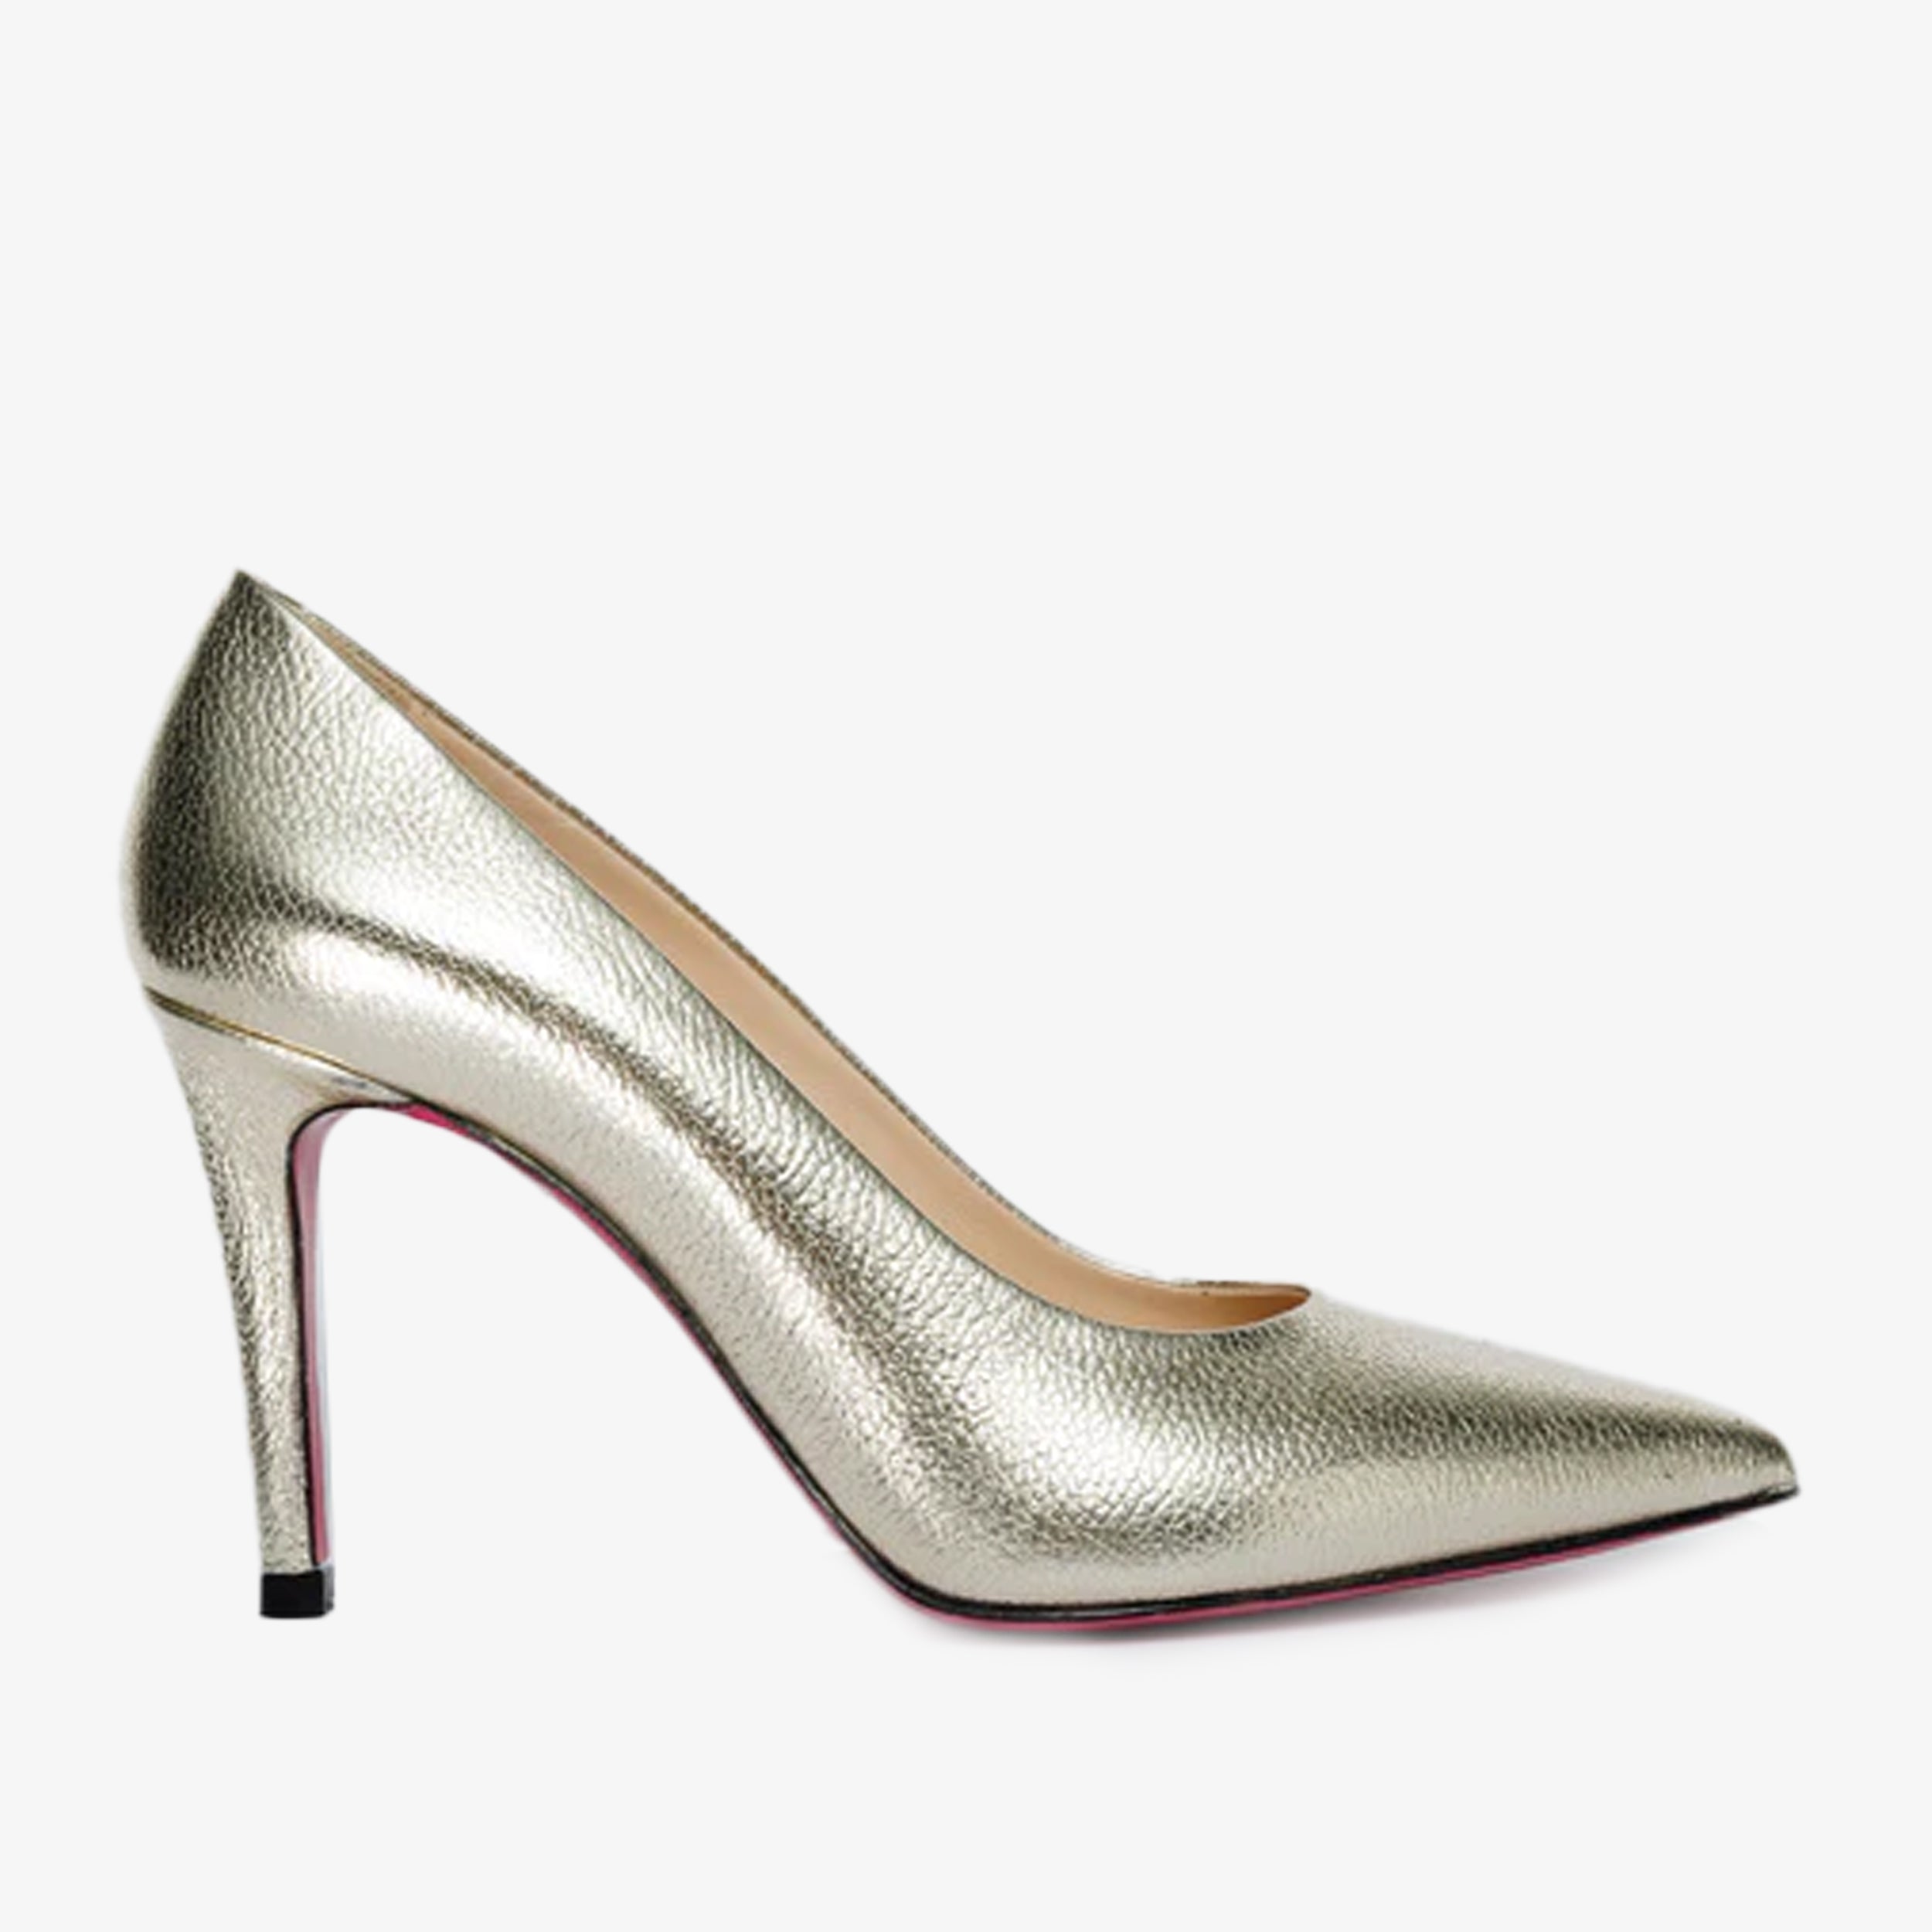 The Ege Gold Leather Pump Fuchsia Sole Women Shoe